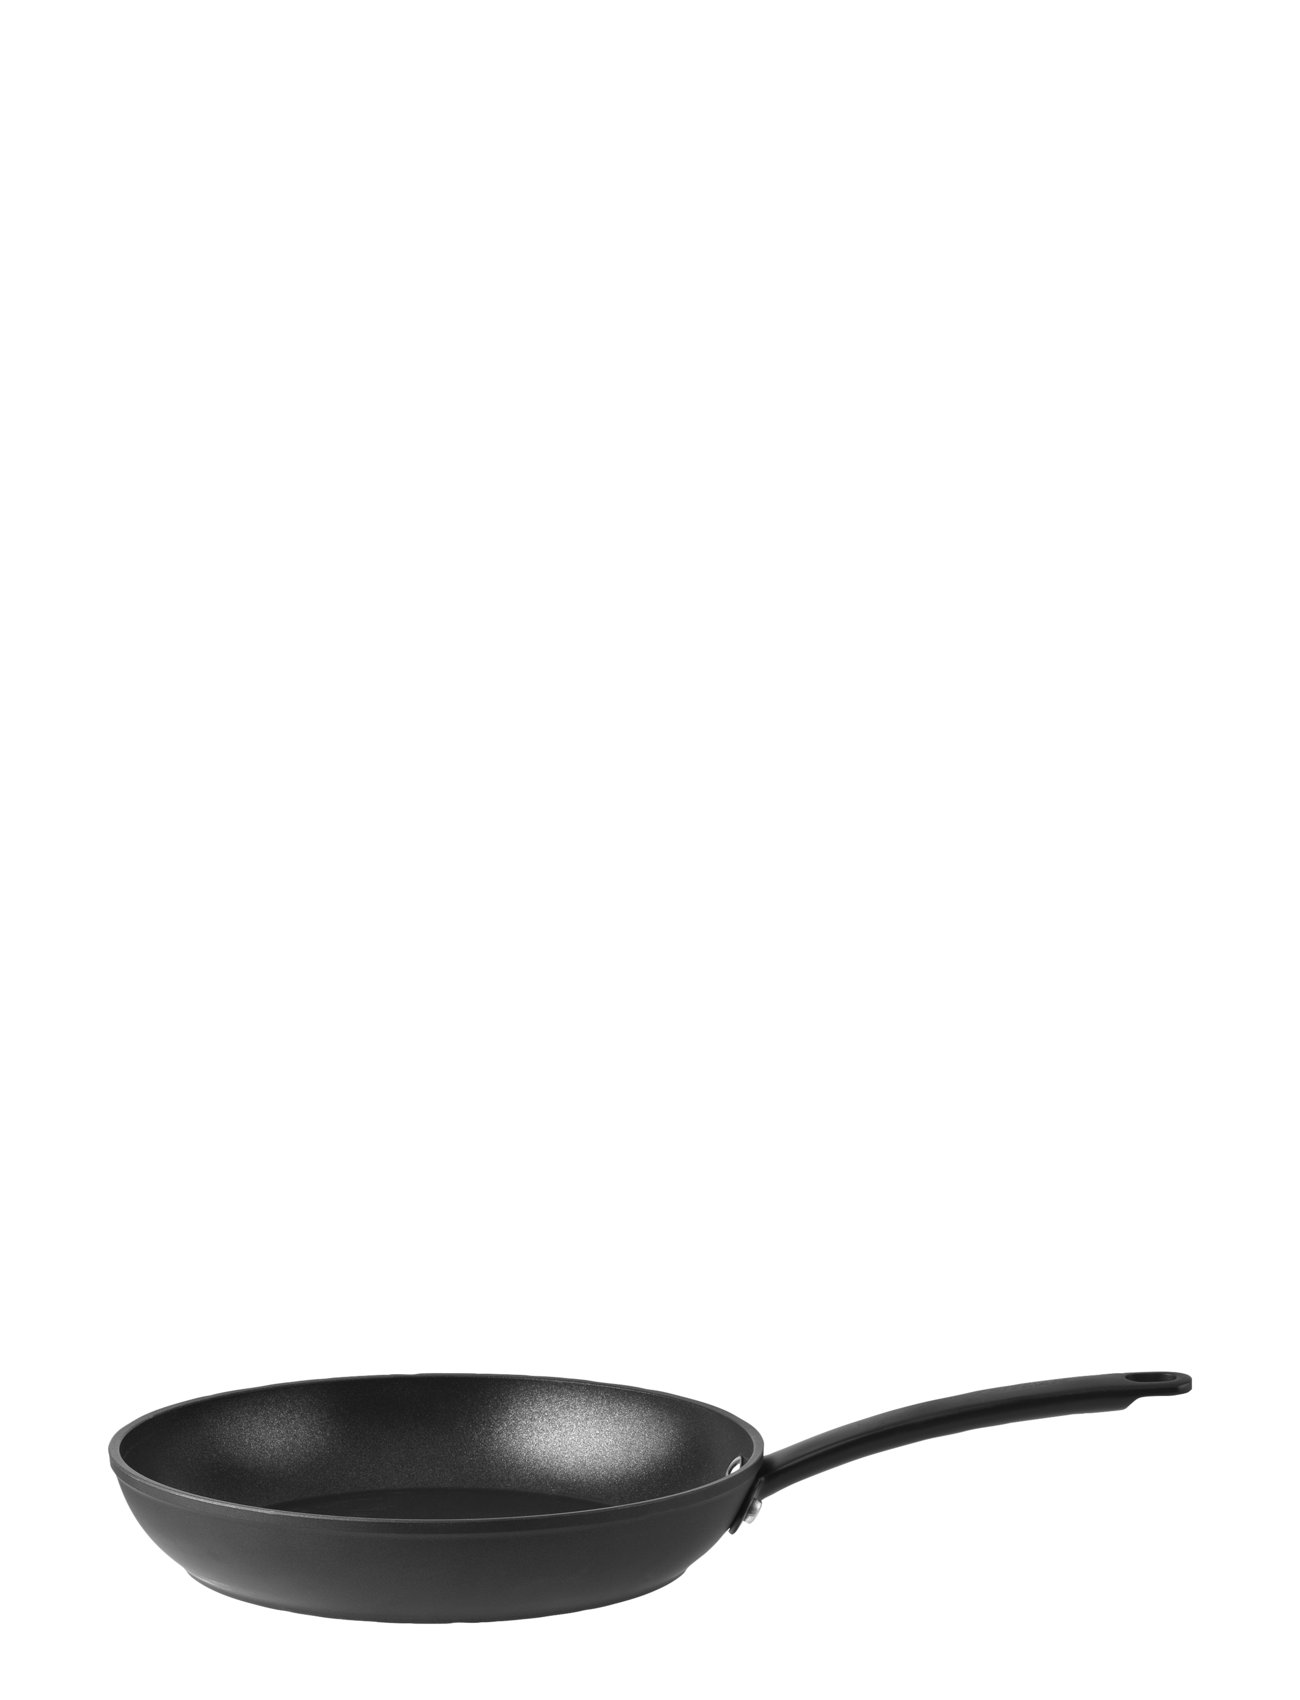 Stegepande Non-Stick Arc Home Kitchen Pots & Pans Frying Pans Black Pillivuyt Gourmet